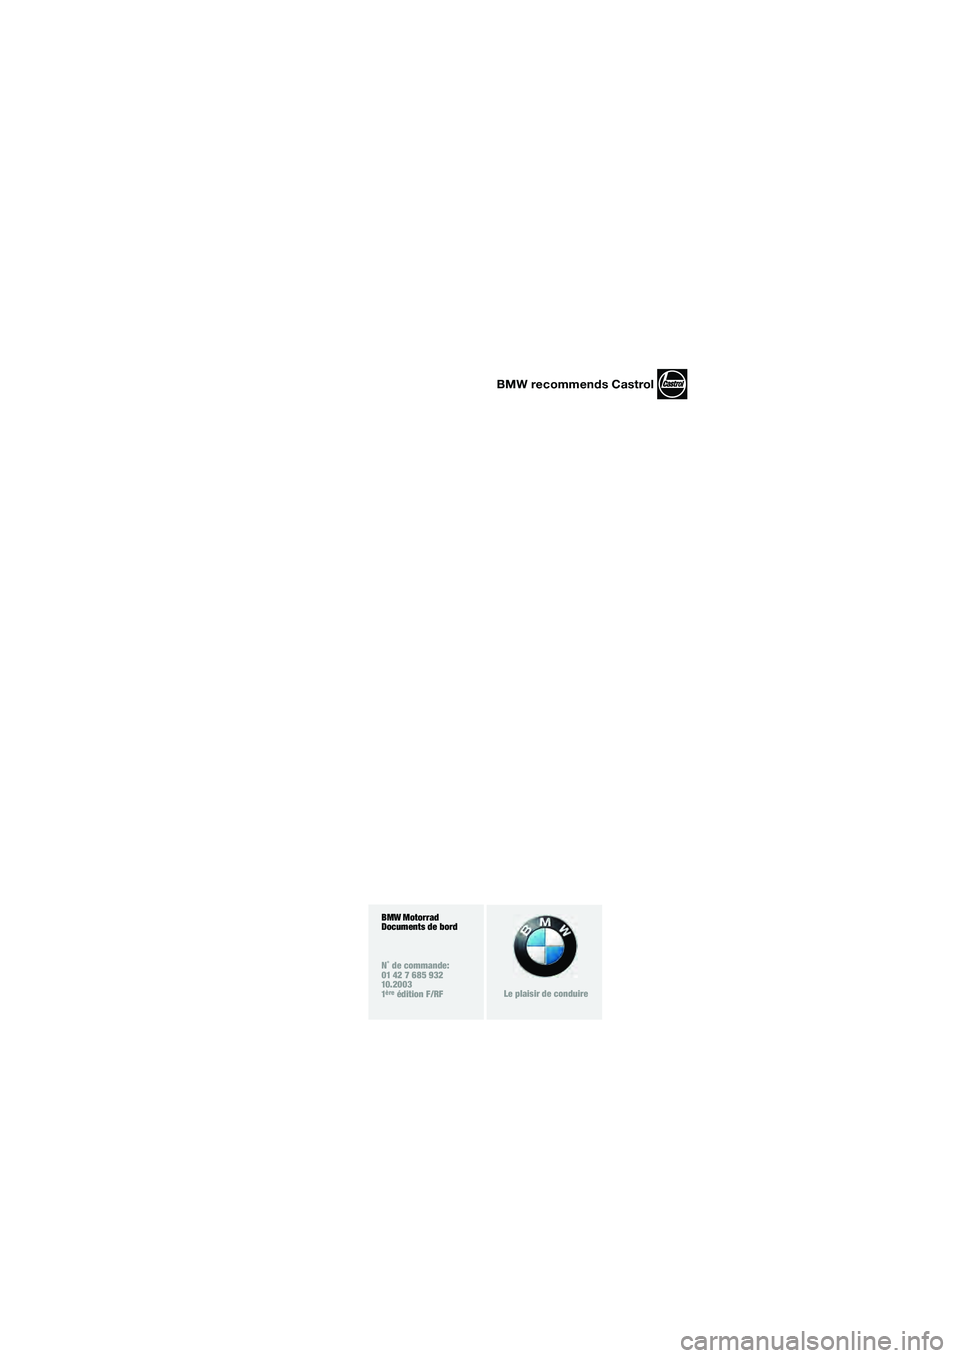 BMW MOTORRAD F 650 GS DAKAR 2003  Livret de bord (in French) 1
BMW recommends Castrol
BMW Motorrad
Documents de bord
N˚ de commande:
01 42 7 685 932
10.2003
1
ère édition F/RFLe plaisir de conduire
10R13bkf4.book  Seite 3  Montag, 22. September 2003  3:34 15